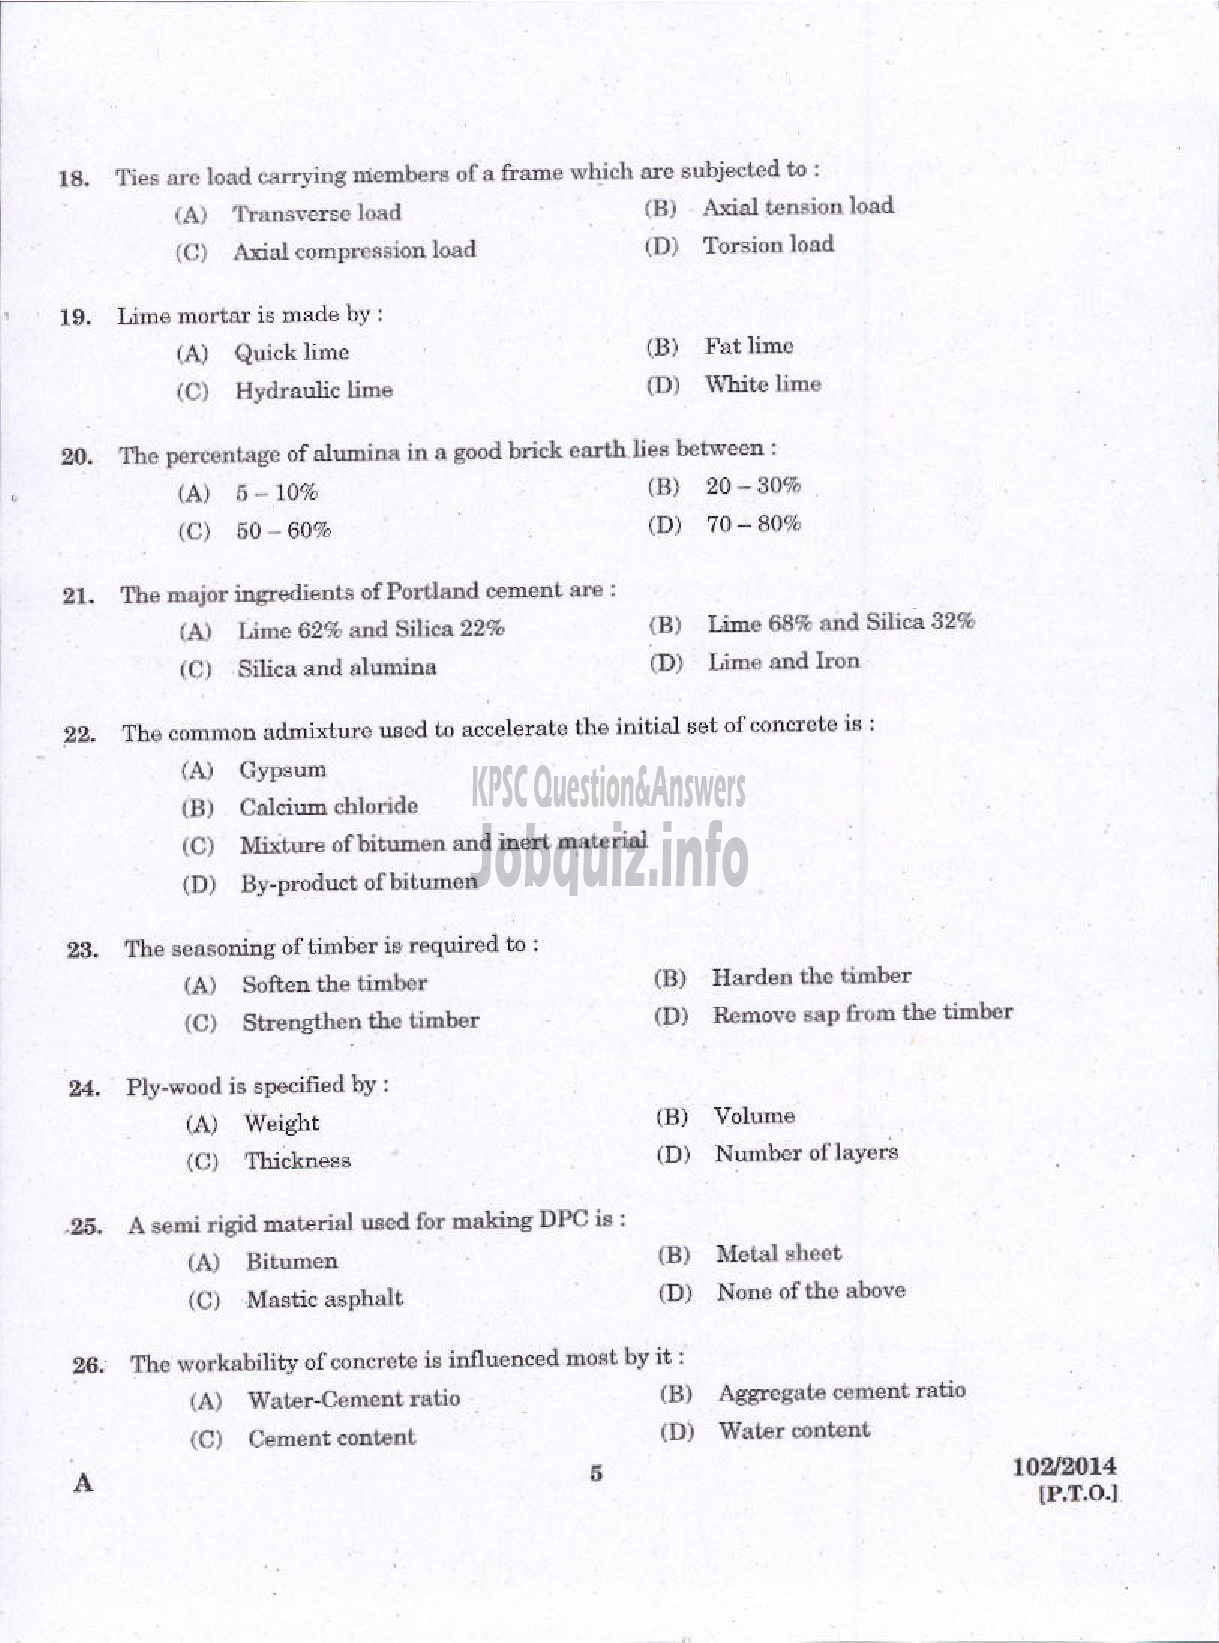 Kerala PSC Question Paper - III GRADE OVERSEER CIVIL SR FOR SC ST IRRIGATION AND II GRADE OVERSEER TRACER PUBLIC WORKS IRRIGATION-3